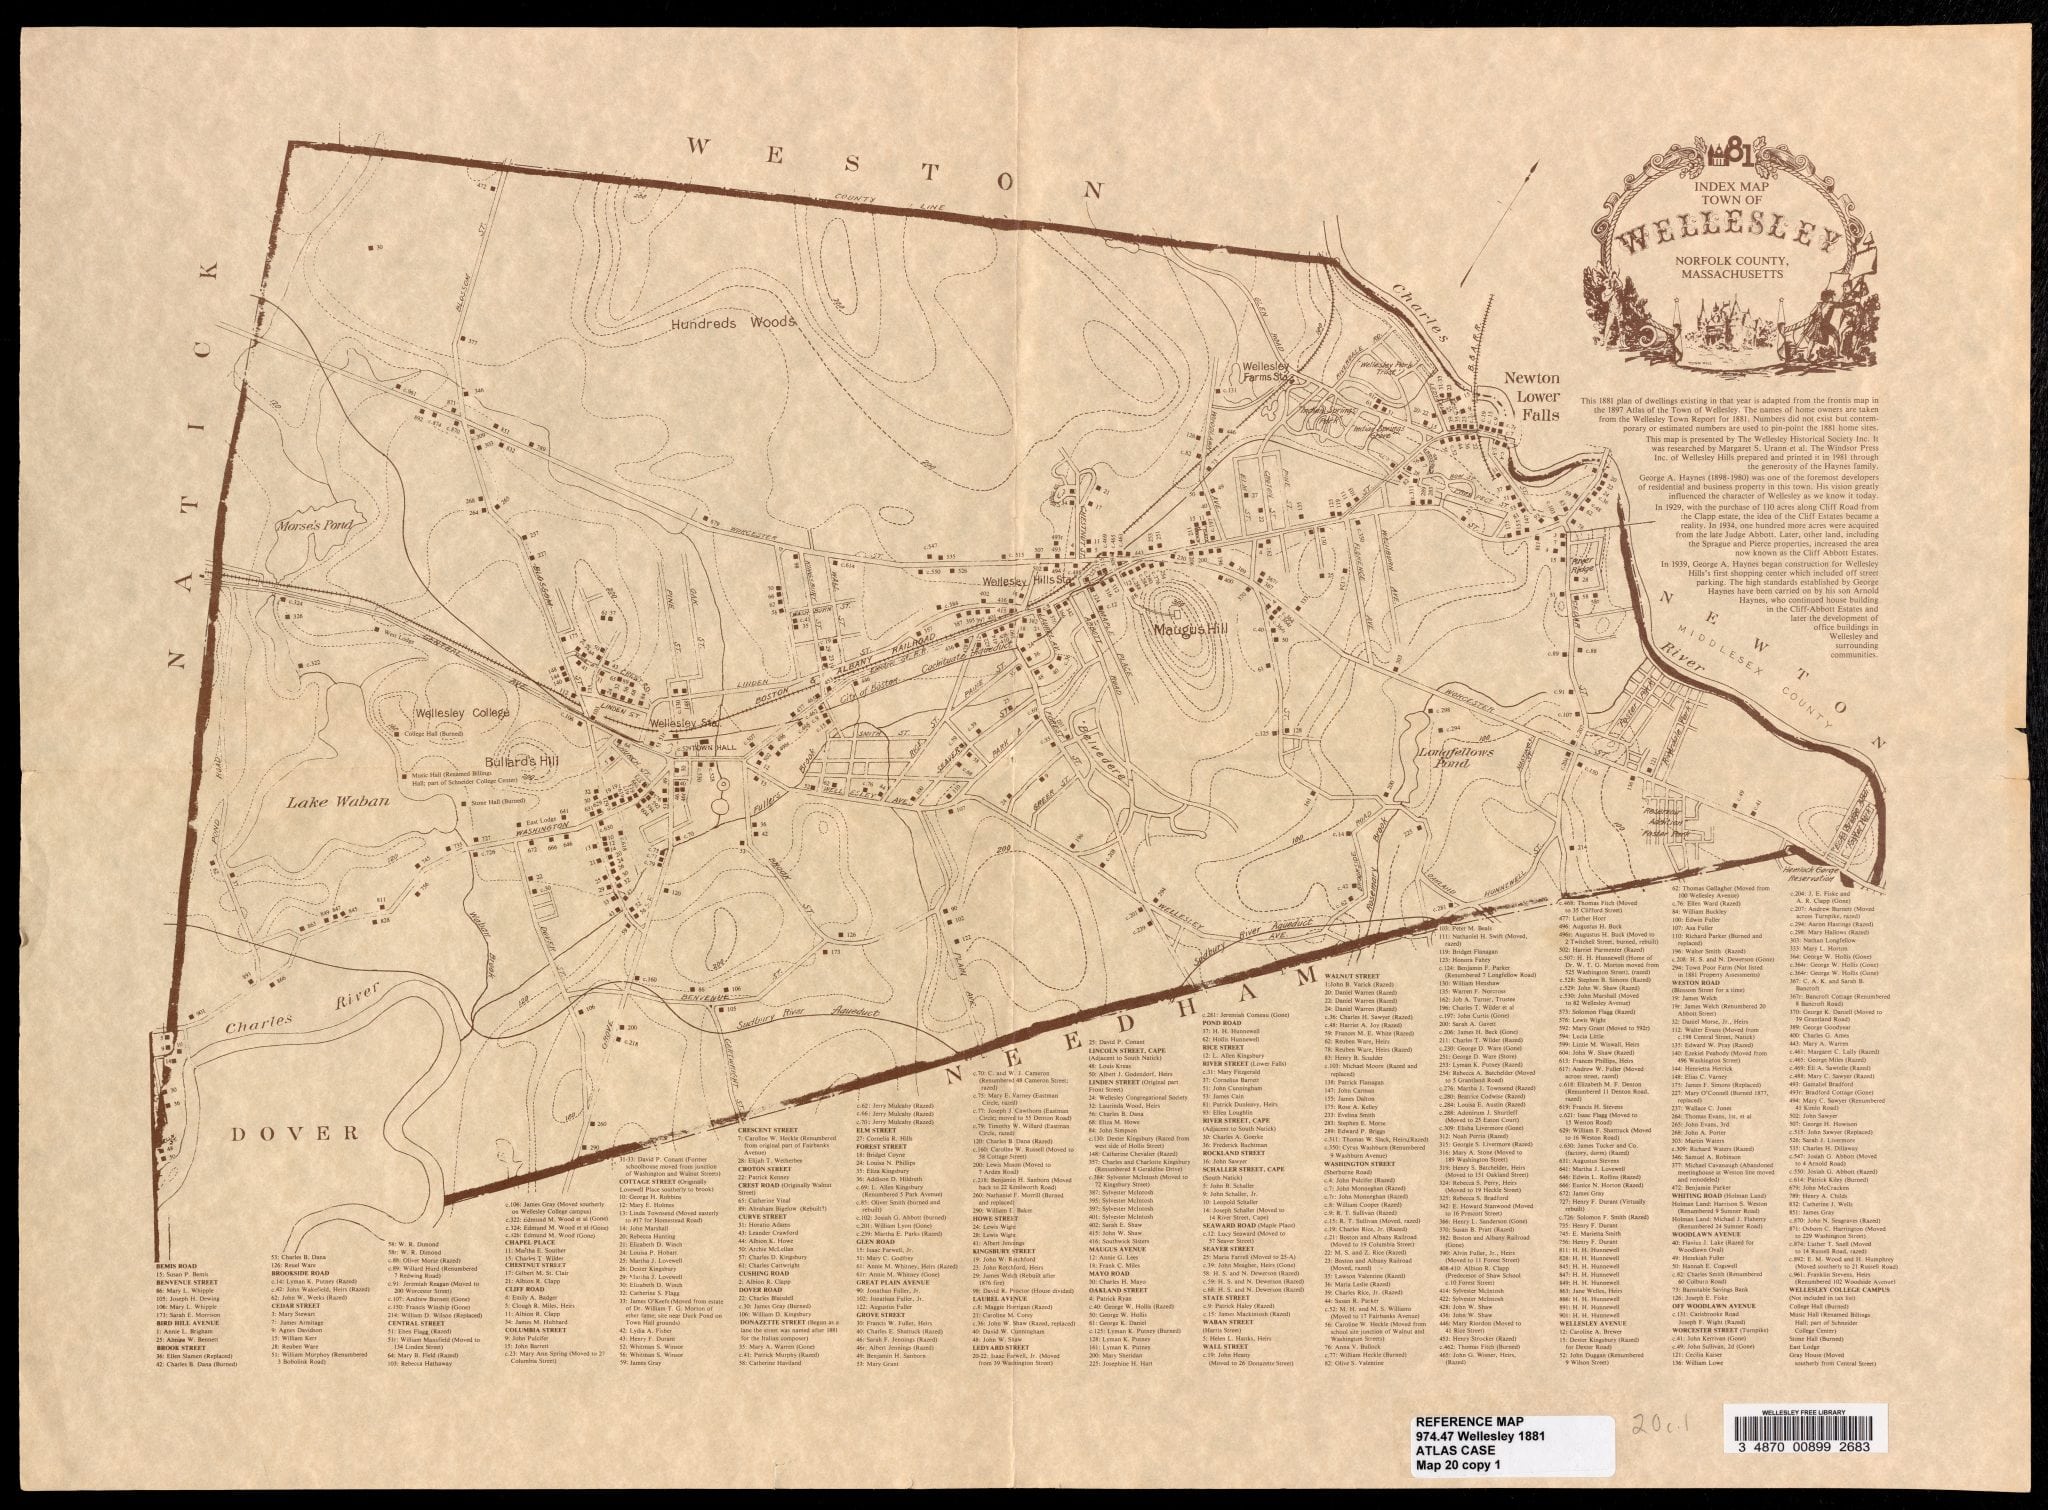 Wellesley map